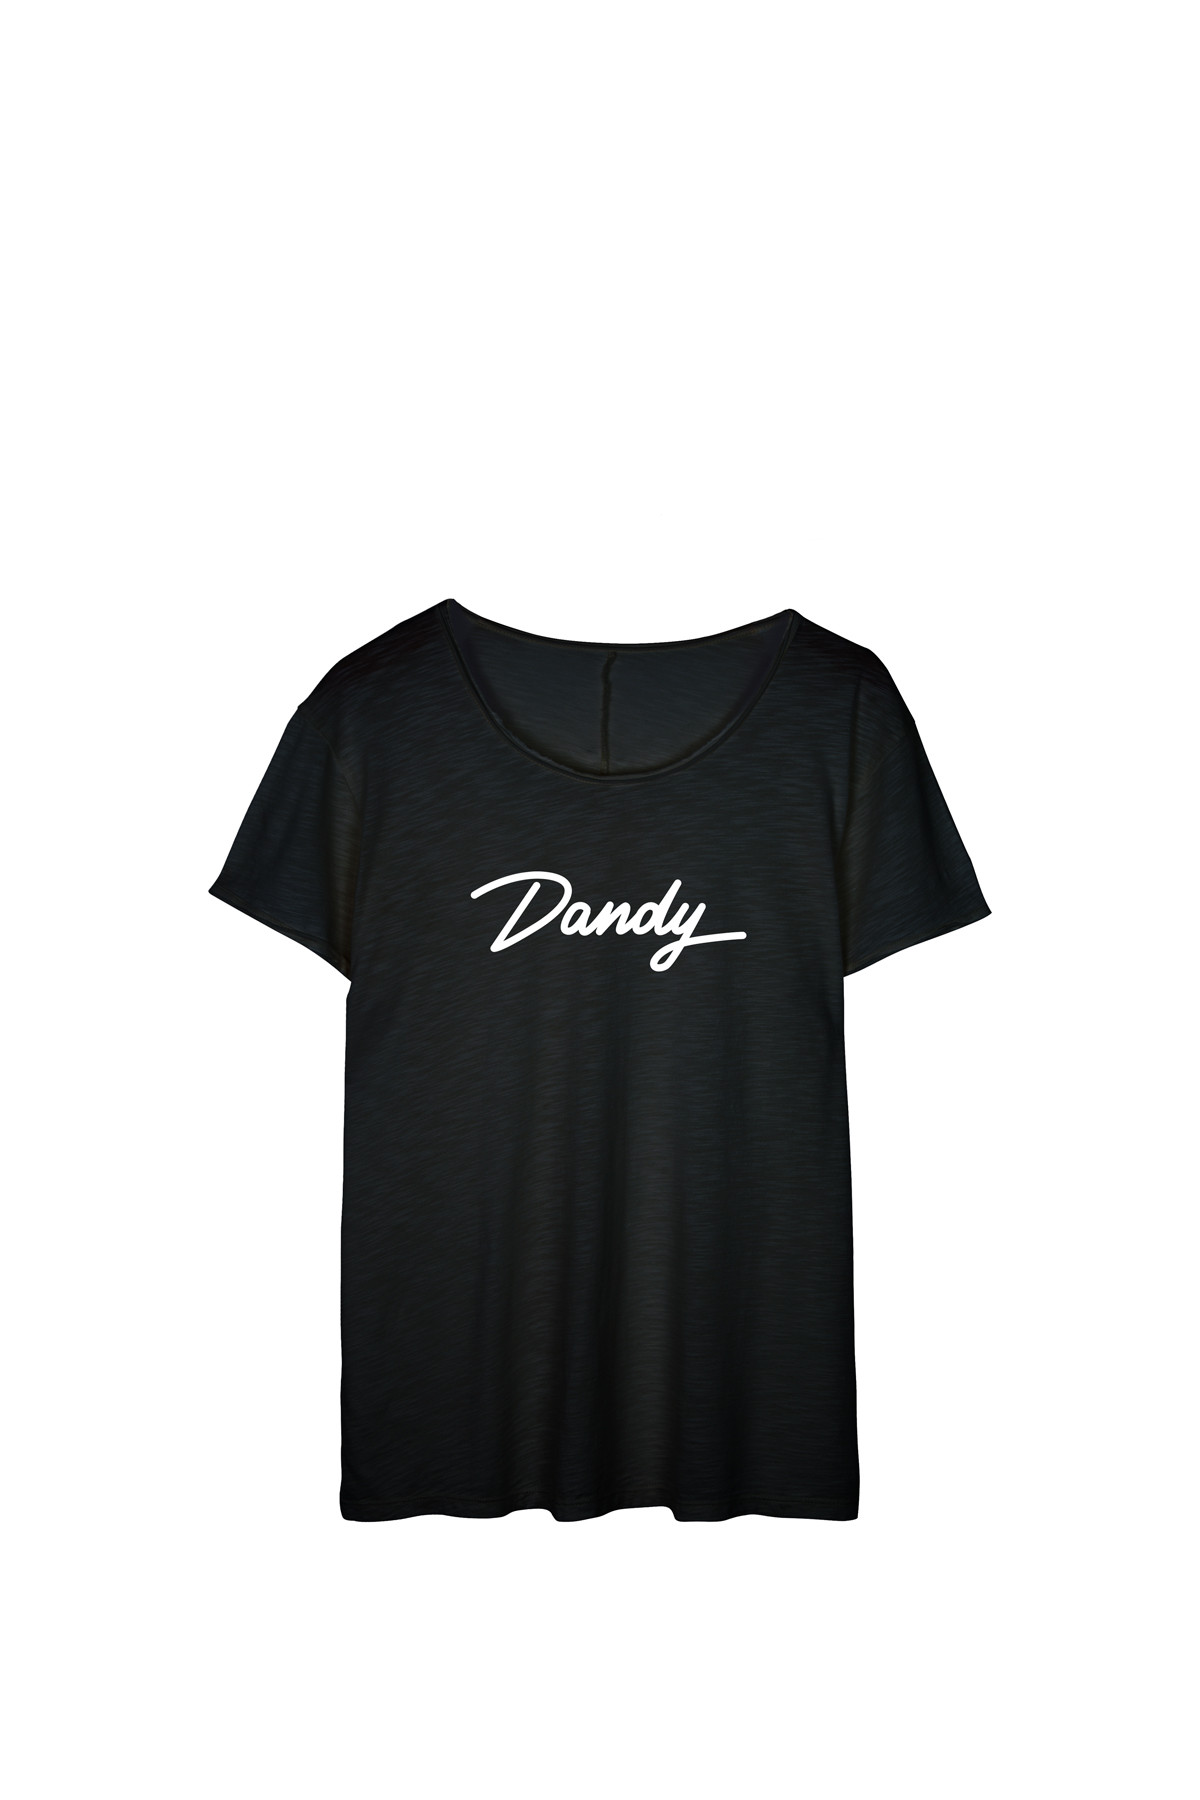 Photo de STOP Tshirt coton flammé DANDY chez French Disorder